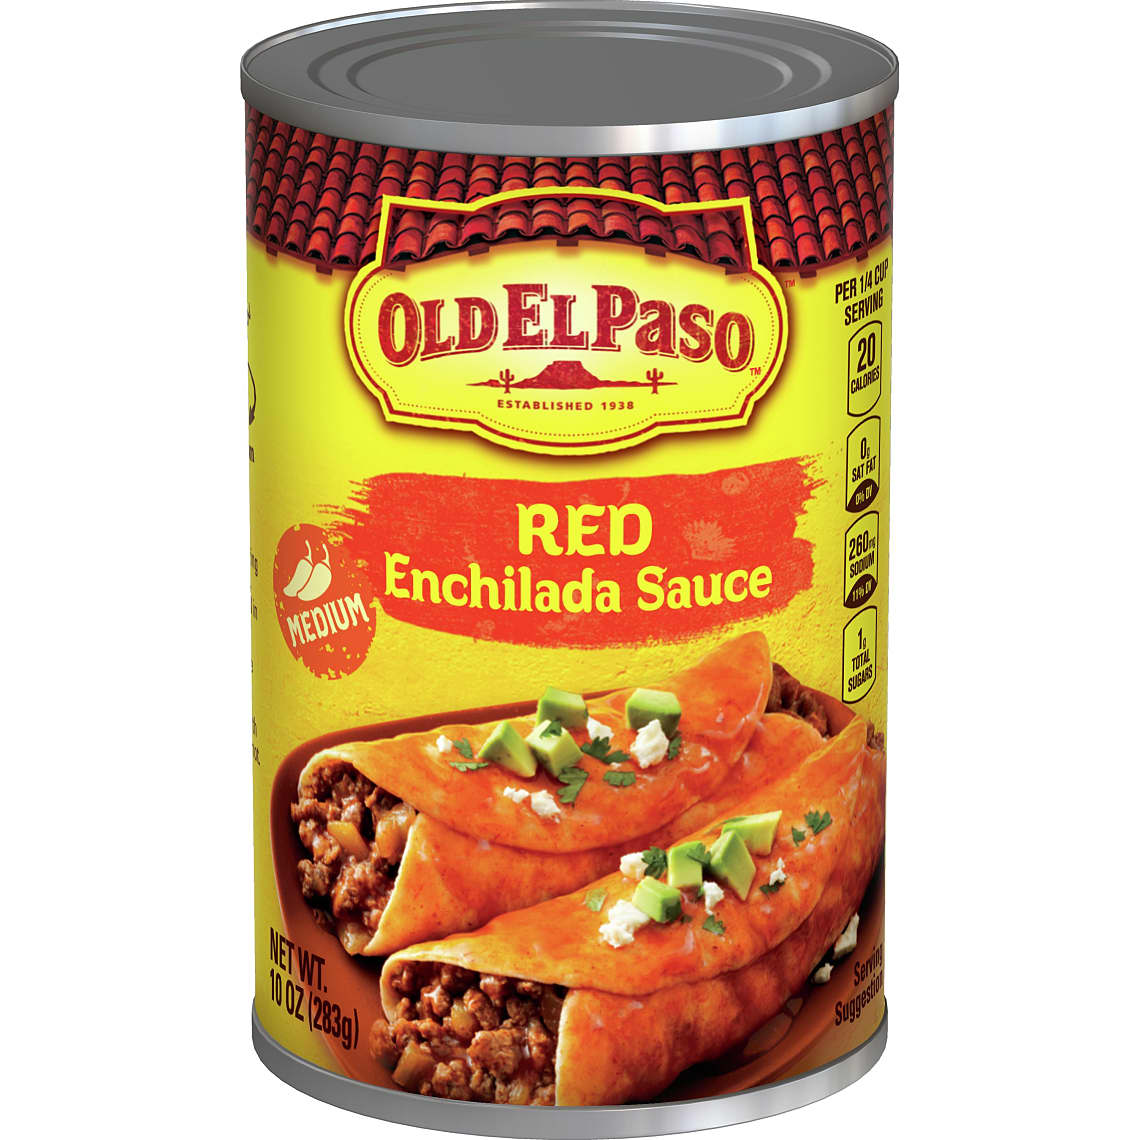 Old El Paso Enchilada Sauce, Mild, Red, 19 oz Can